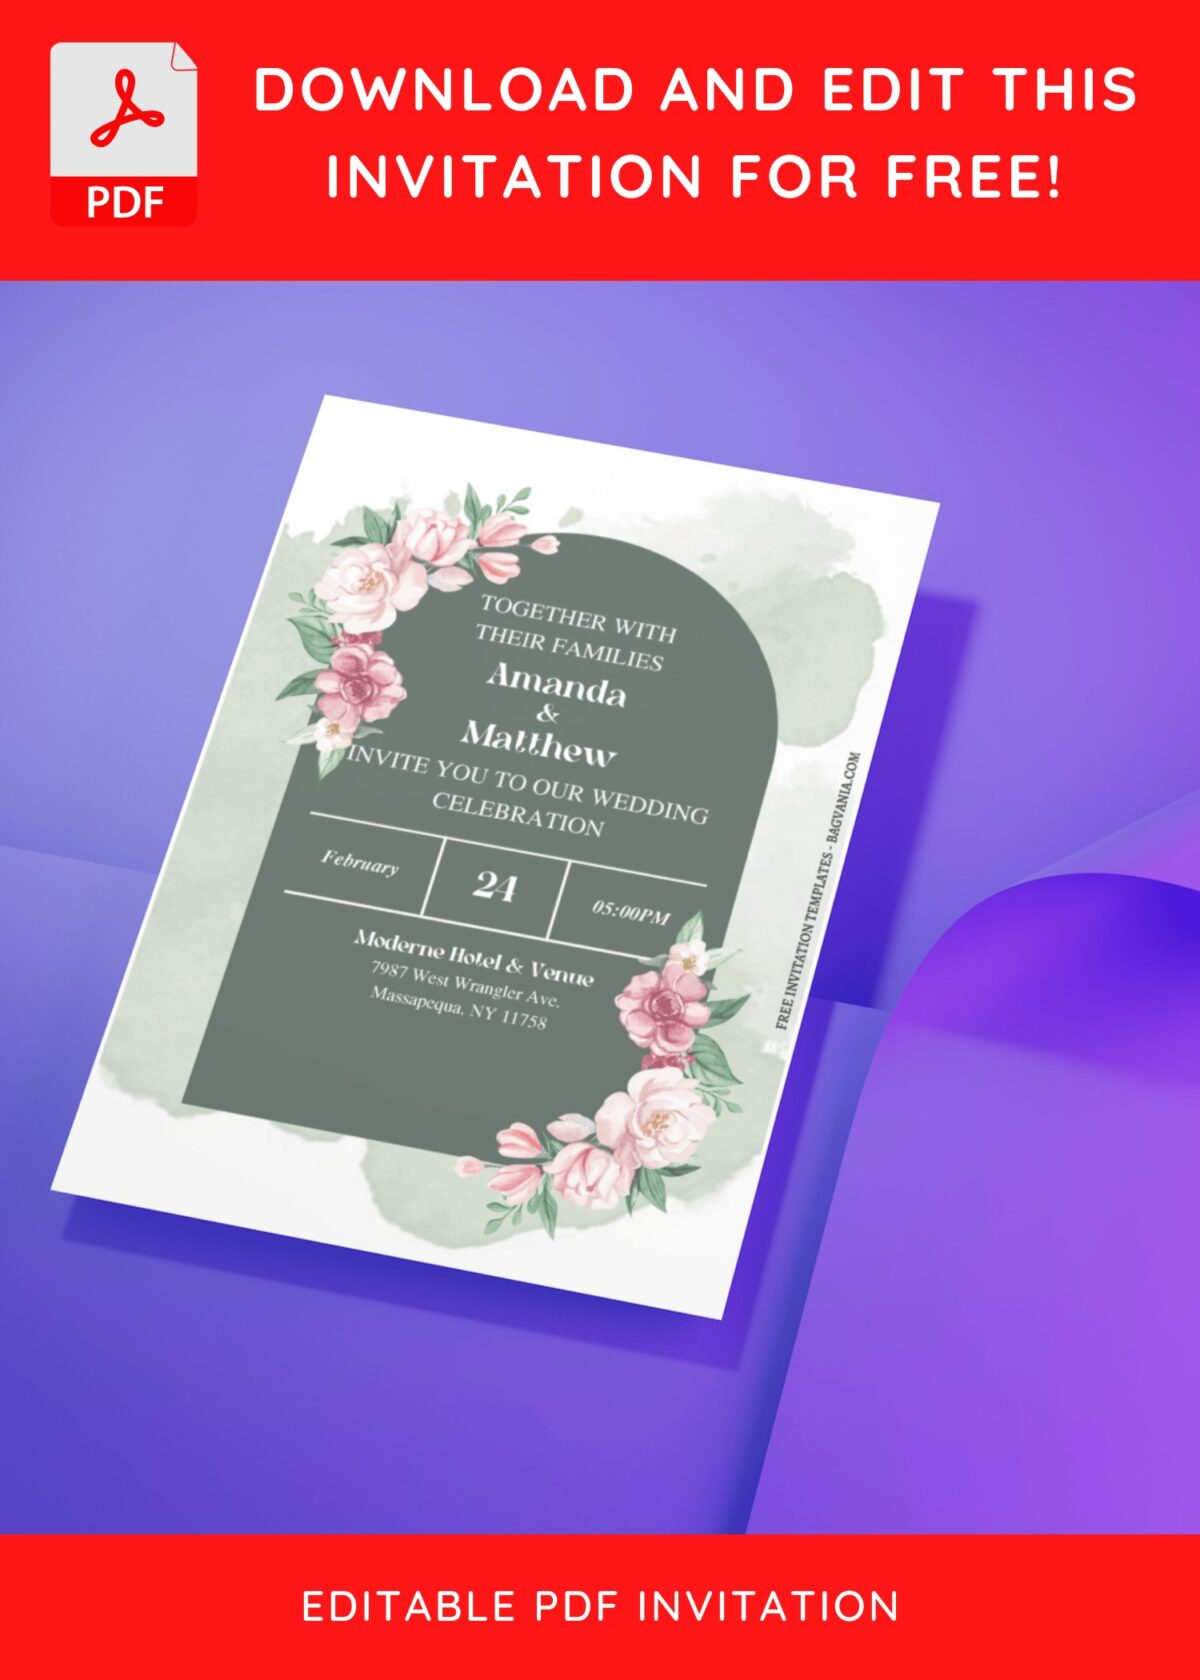 (Free Editable PDF) Classy Blush Pink Floral Wedding Invitation Templates J